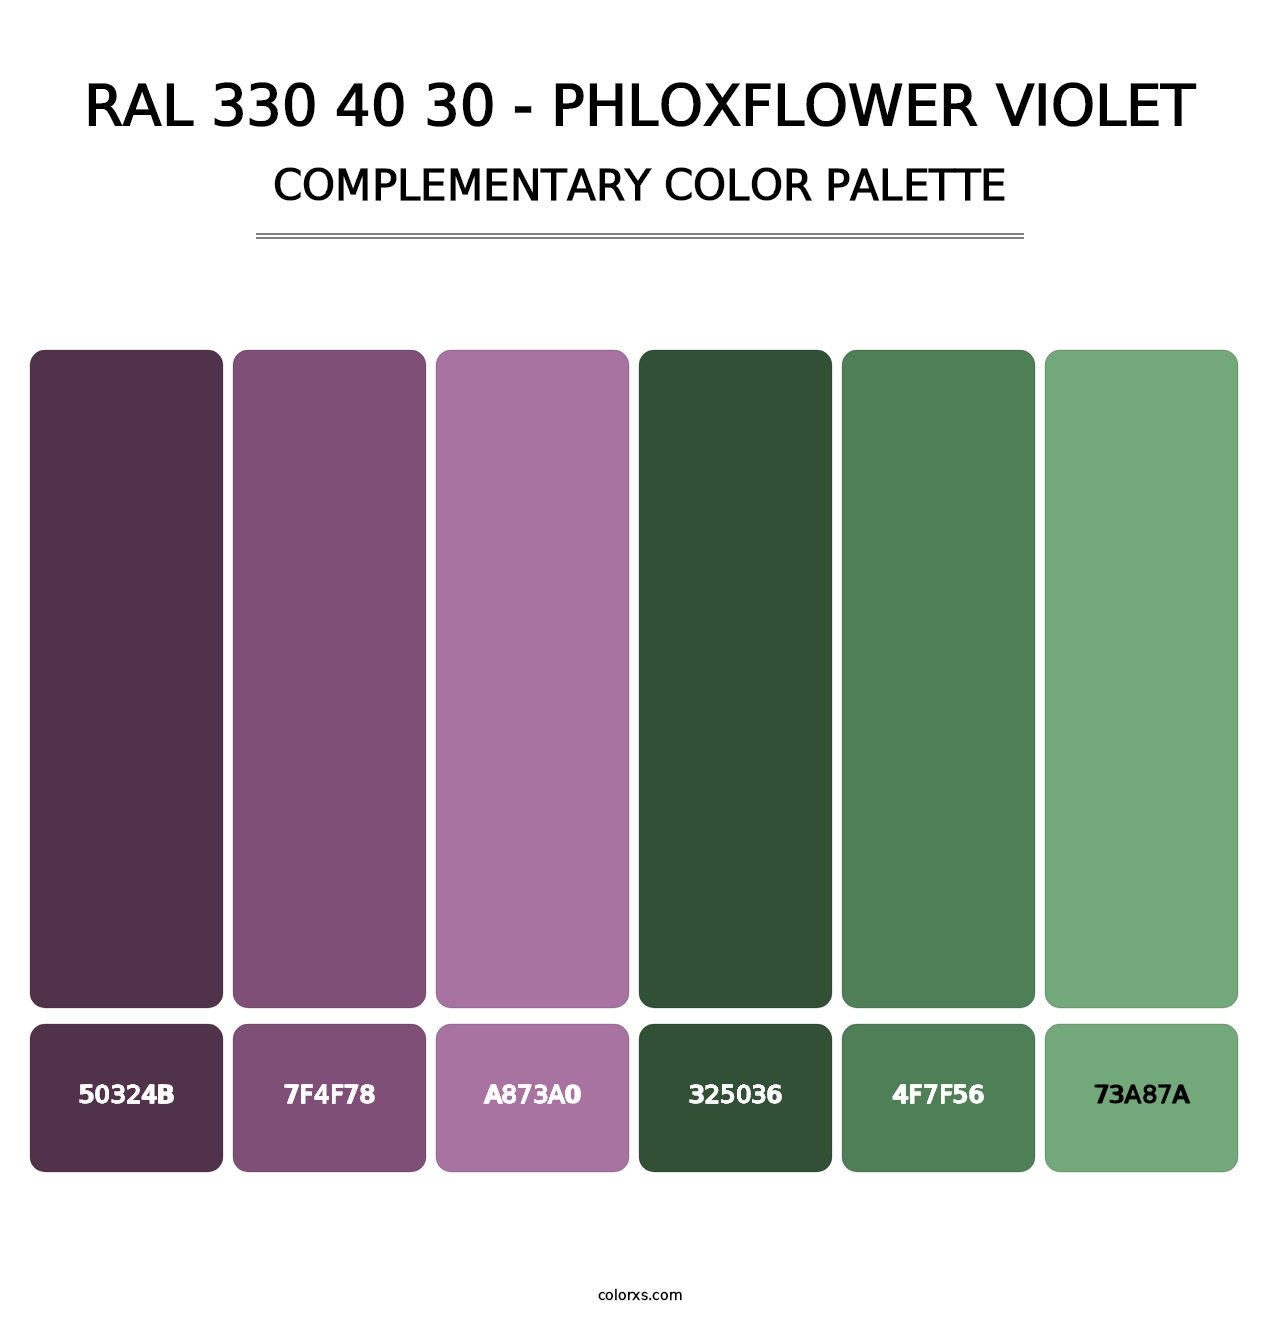 RAL 330 40 30 - Phloxflower Violet - Complementary Color Palette